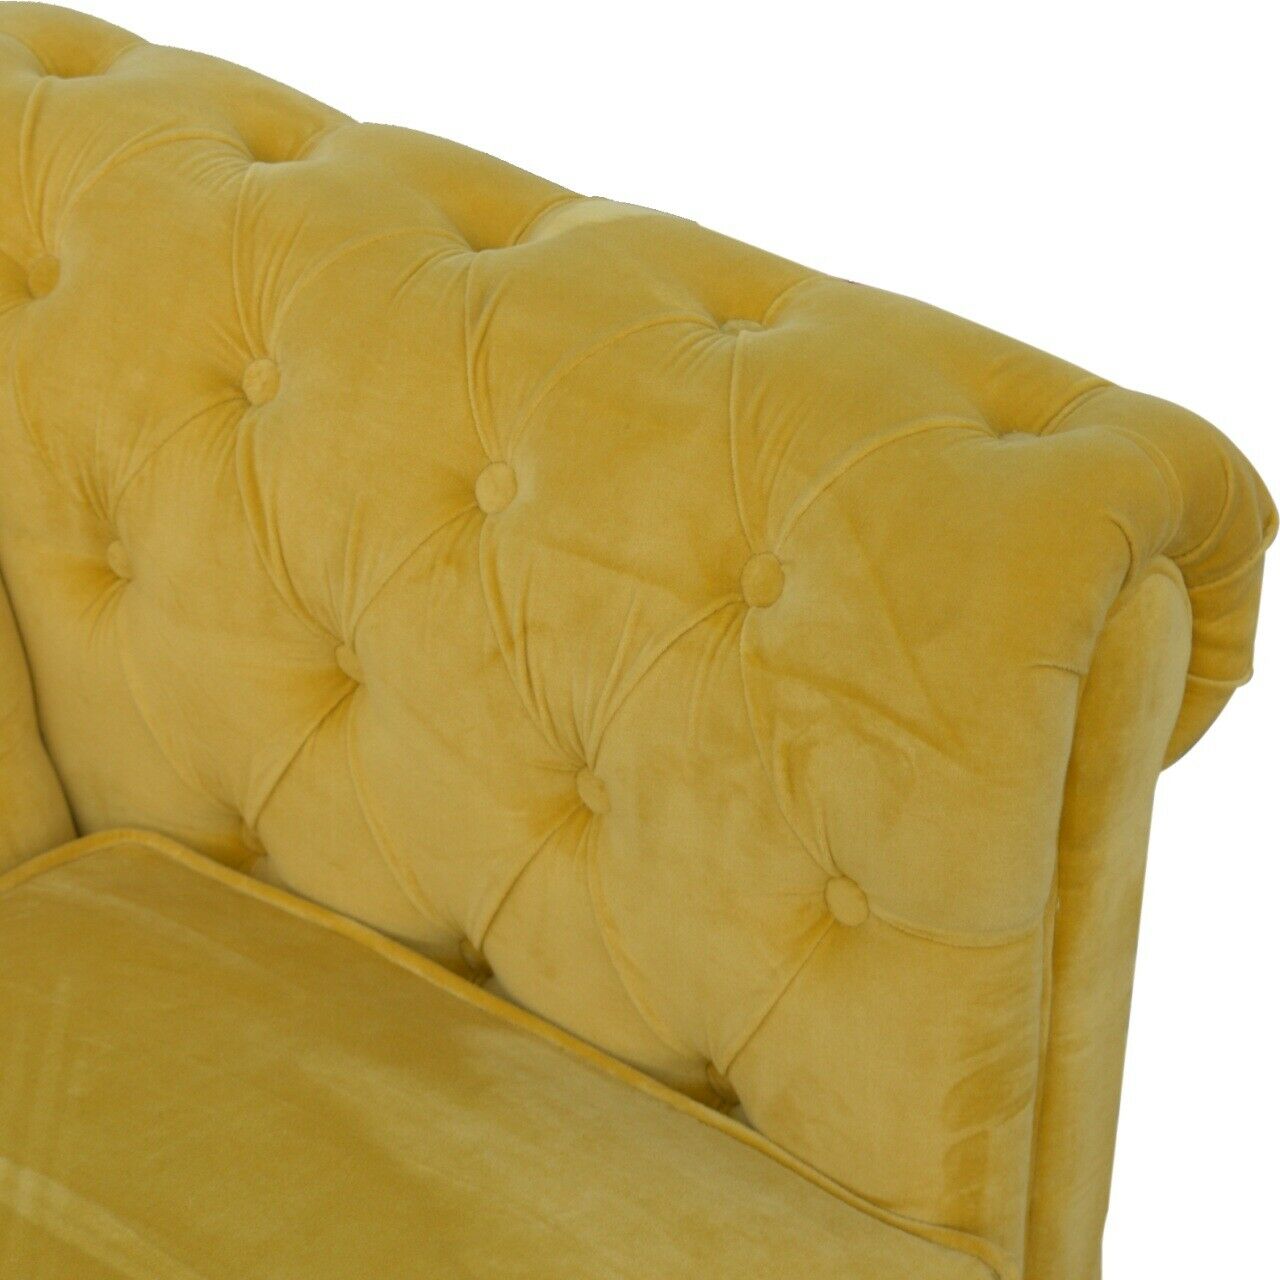 Solid Wood Mustard Yellow Velvet 2 Seater Chesterfield Sofa